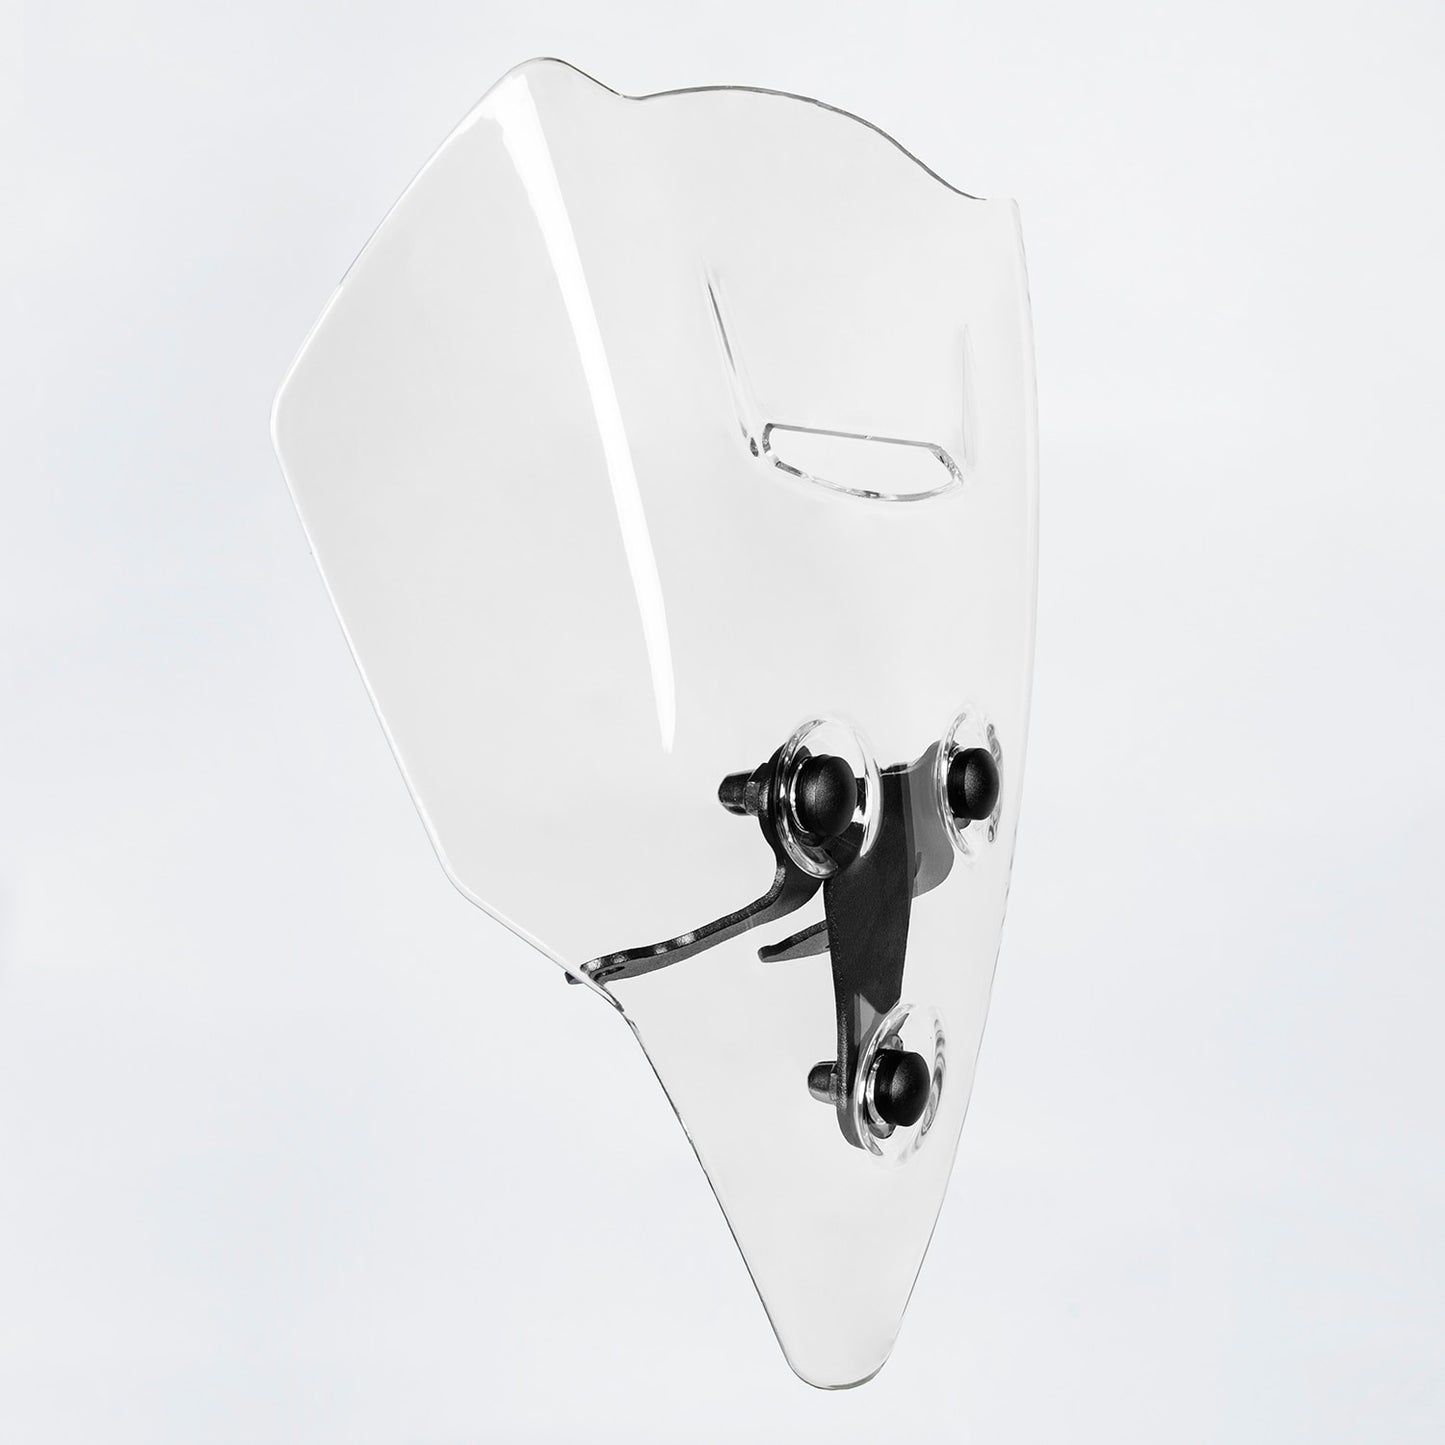 Motorcycle Windscreen Windshield Air Flow Deflector Visor For Ducati Streetfighter V4 V4S V4SP 2020-2022 Fairing Accessories